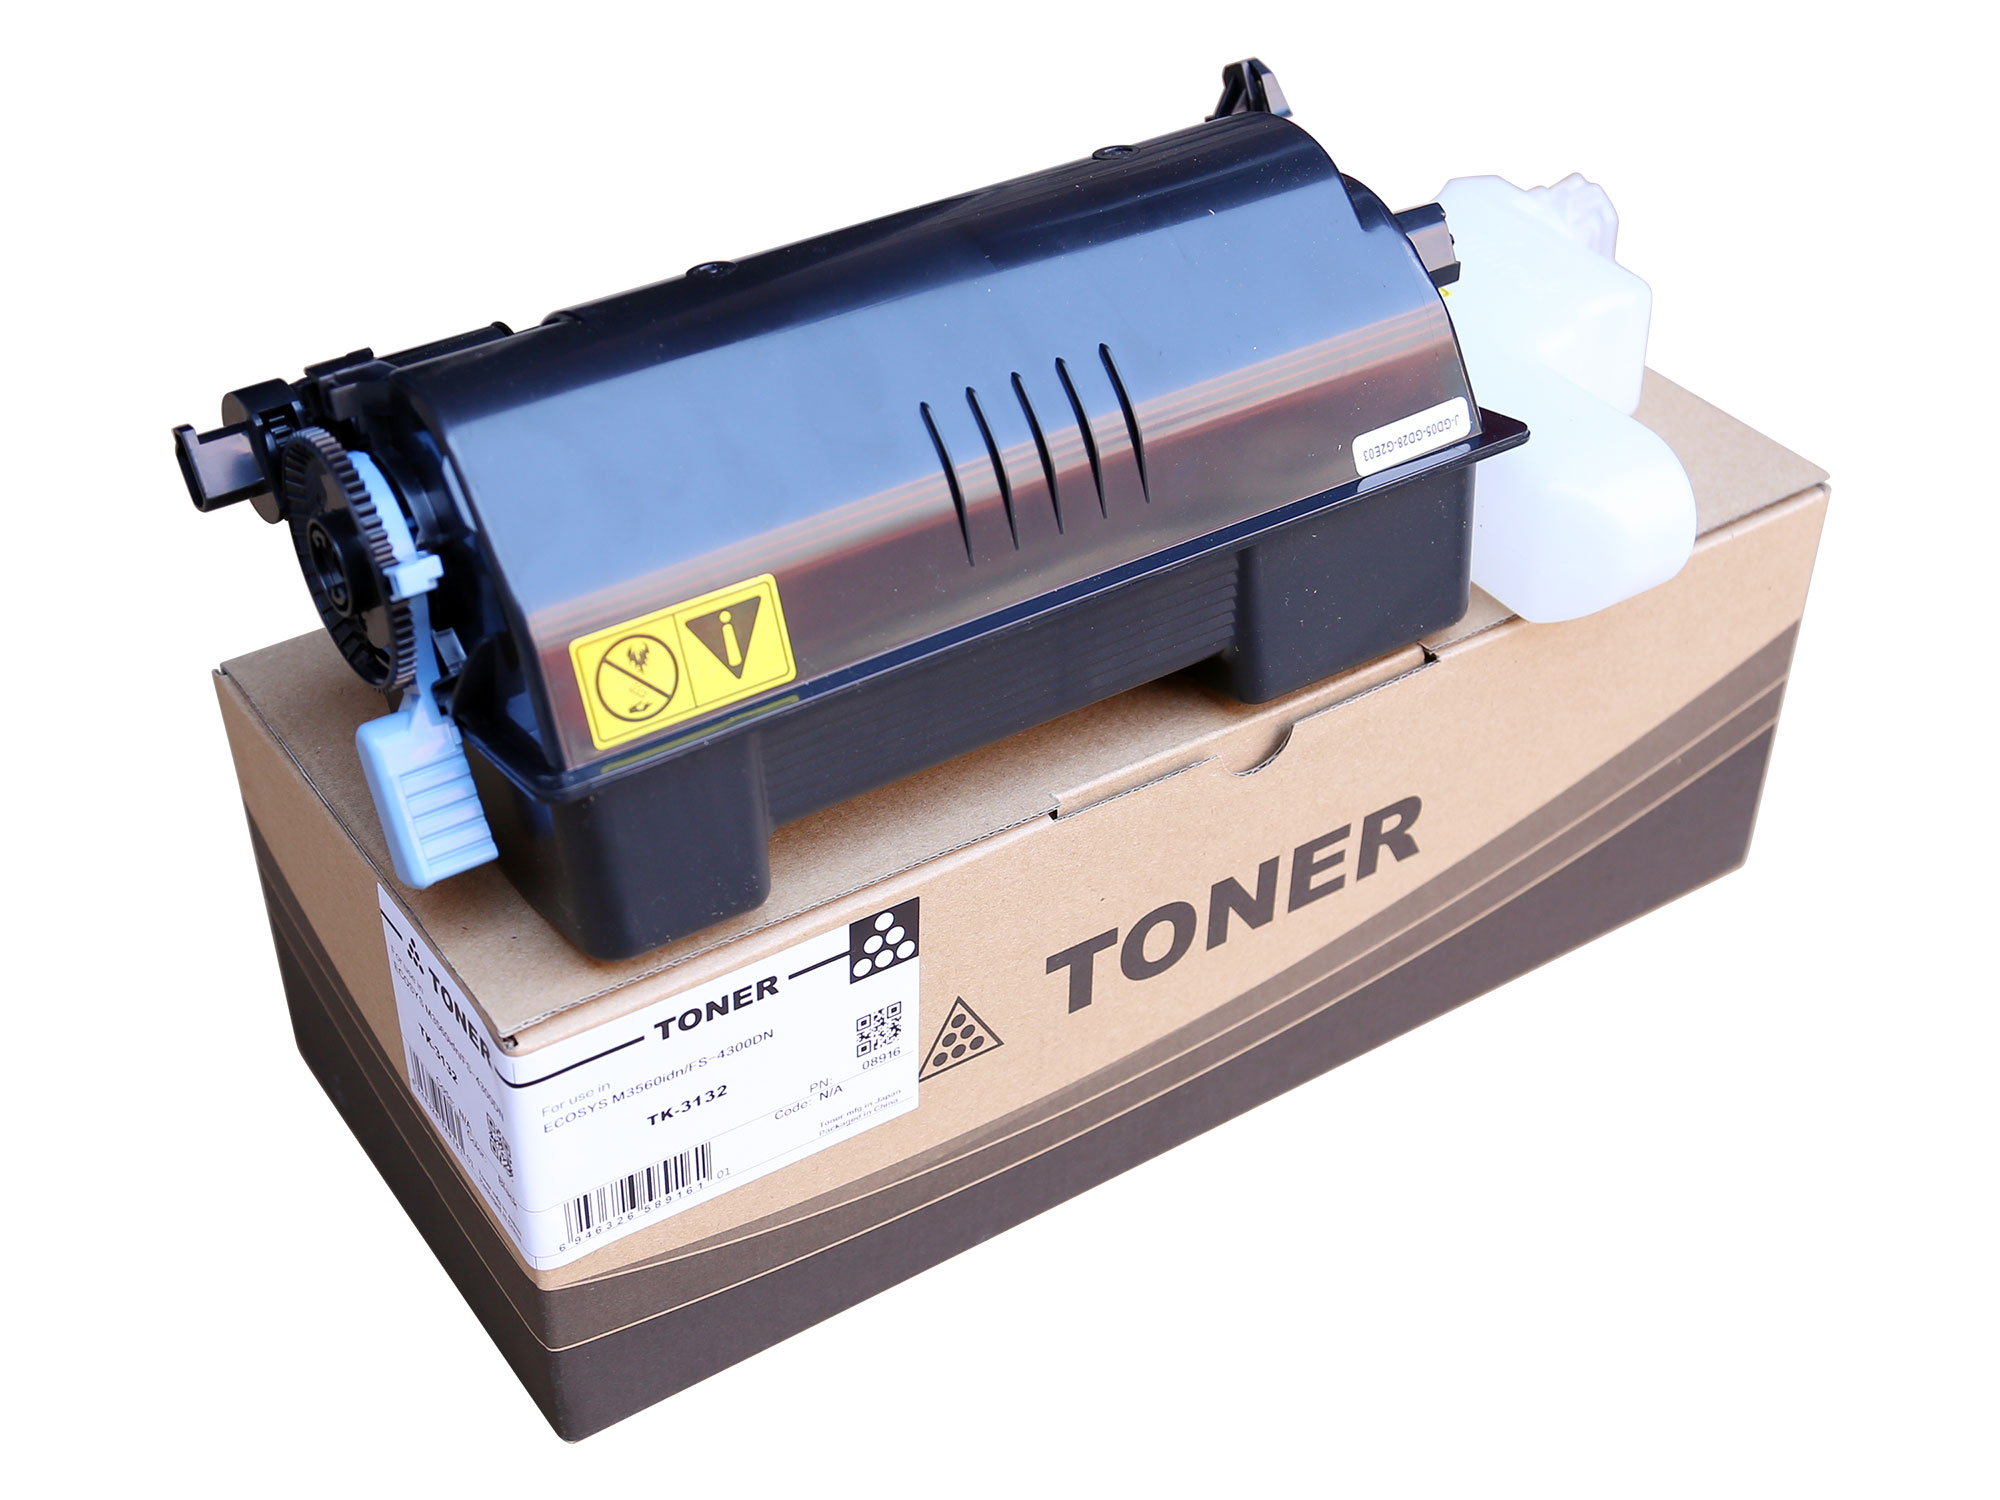 TK-3132 Toner Cartridge for Kyocera ECOSYS M3560idn